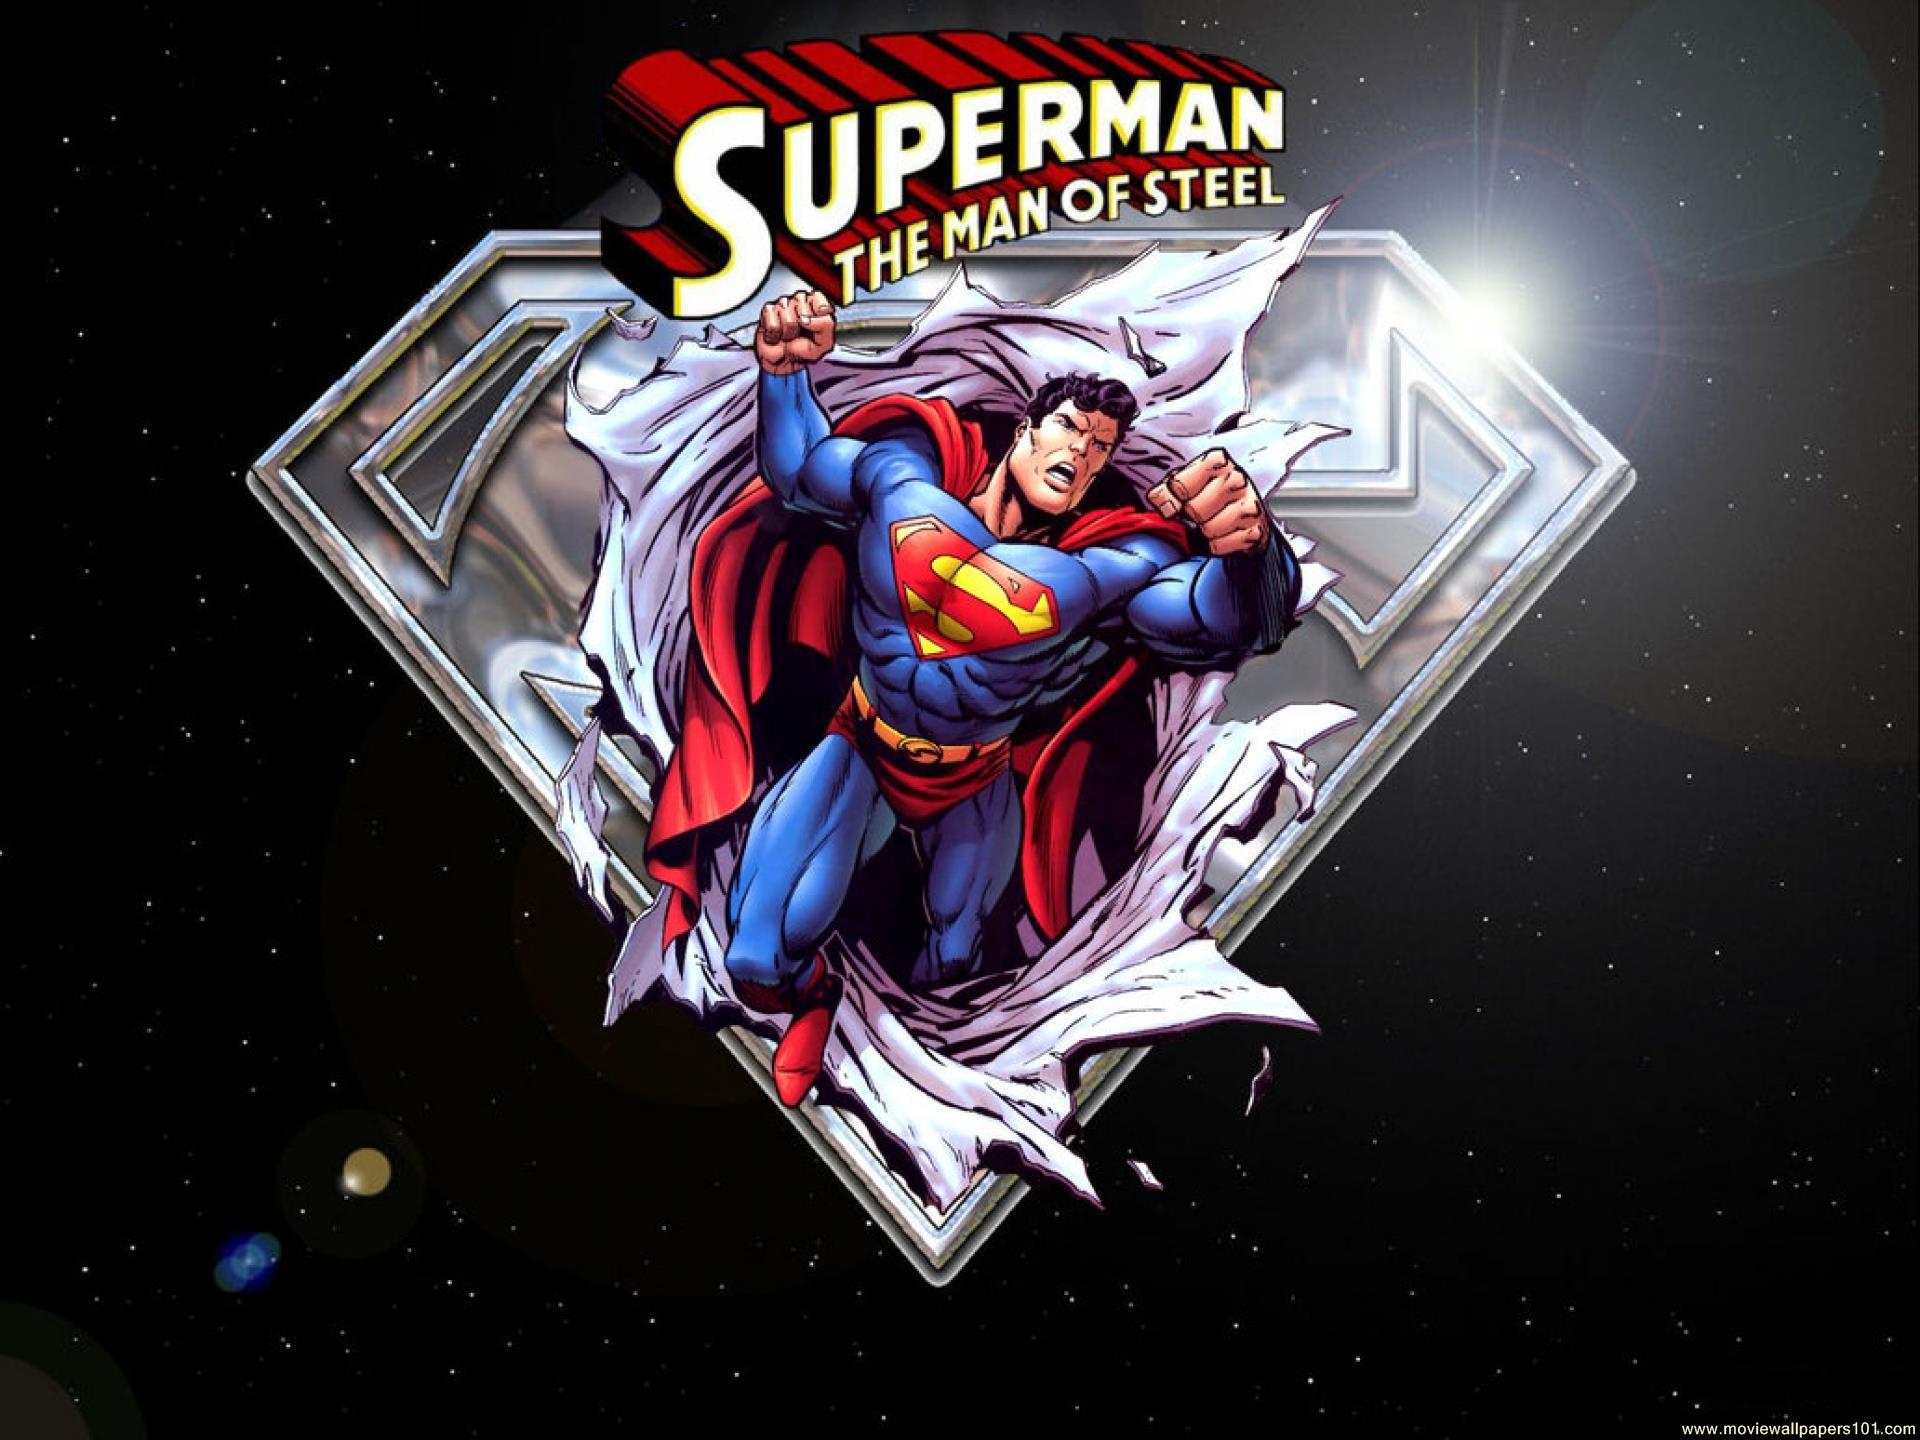 Superman Man of Steel wallpaper - (1920x1440), MovieWallpaper101.com